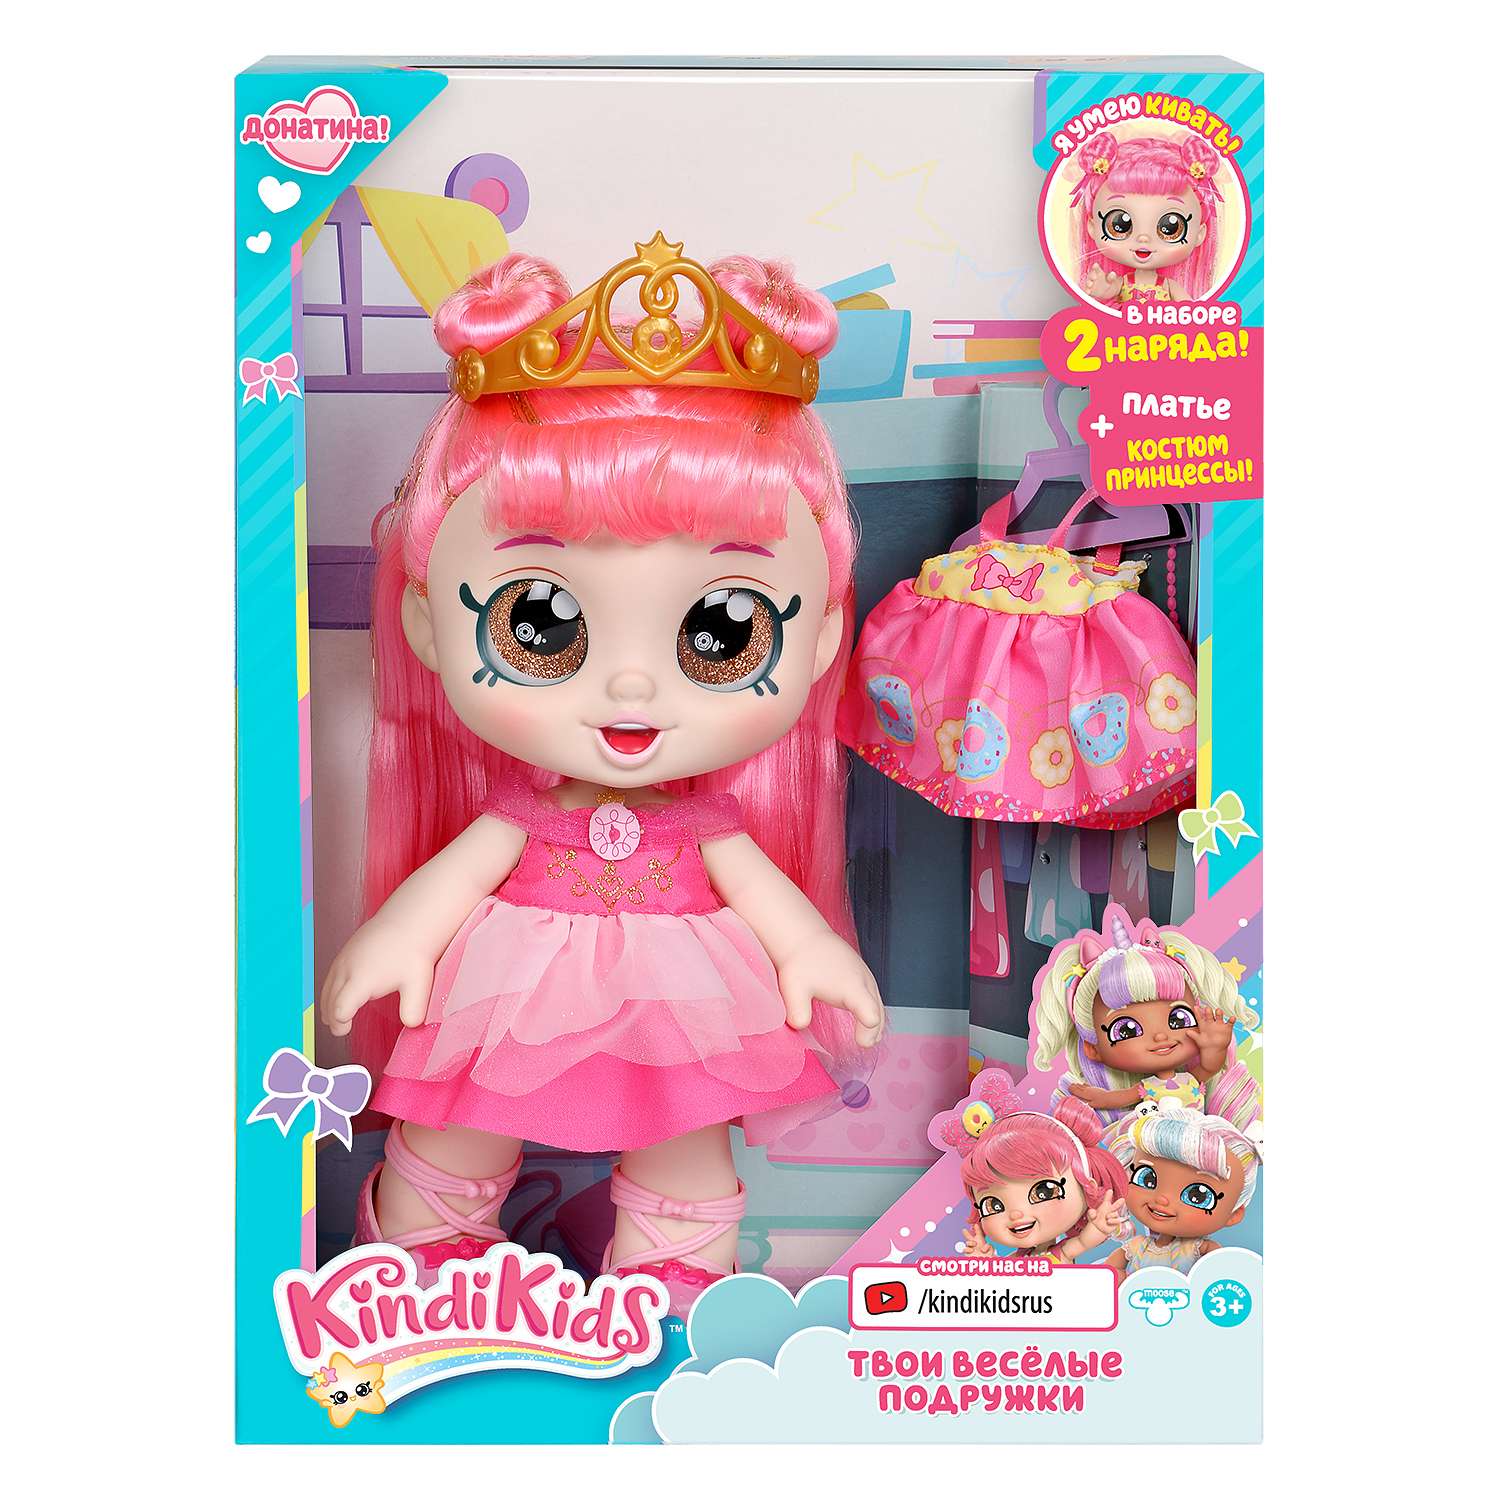 Набор игровой KindiKids Кукла Донатина Принцесса с аксессуарами 38835 38835 - фото 2